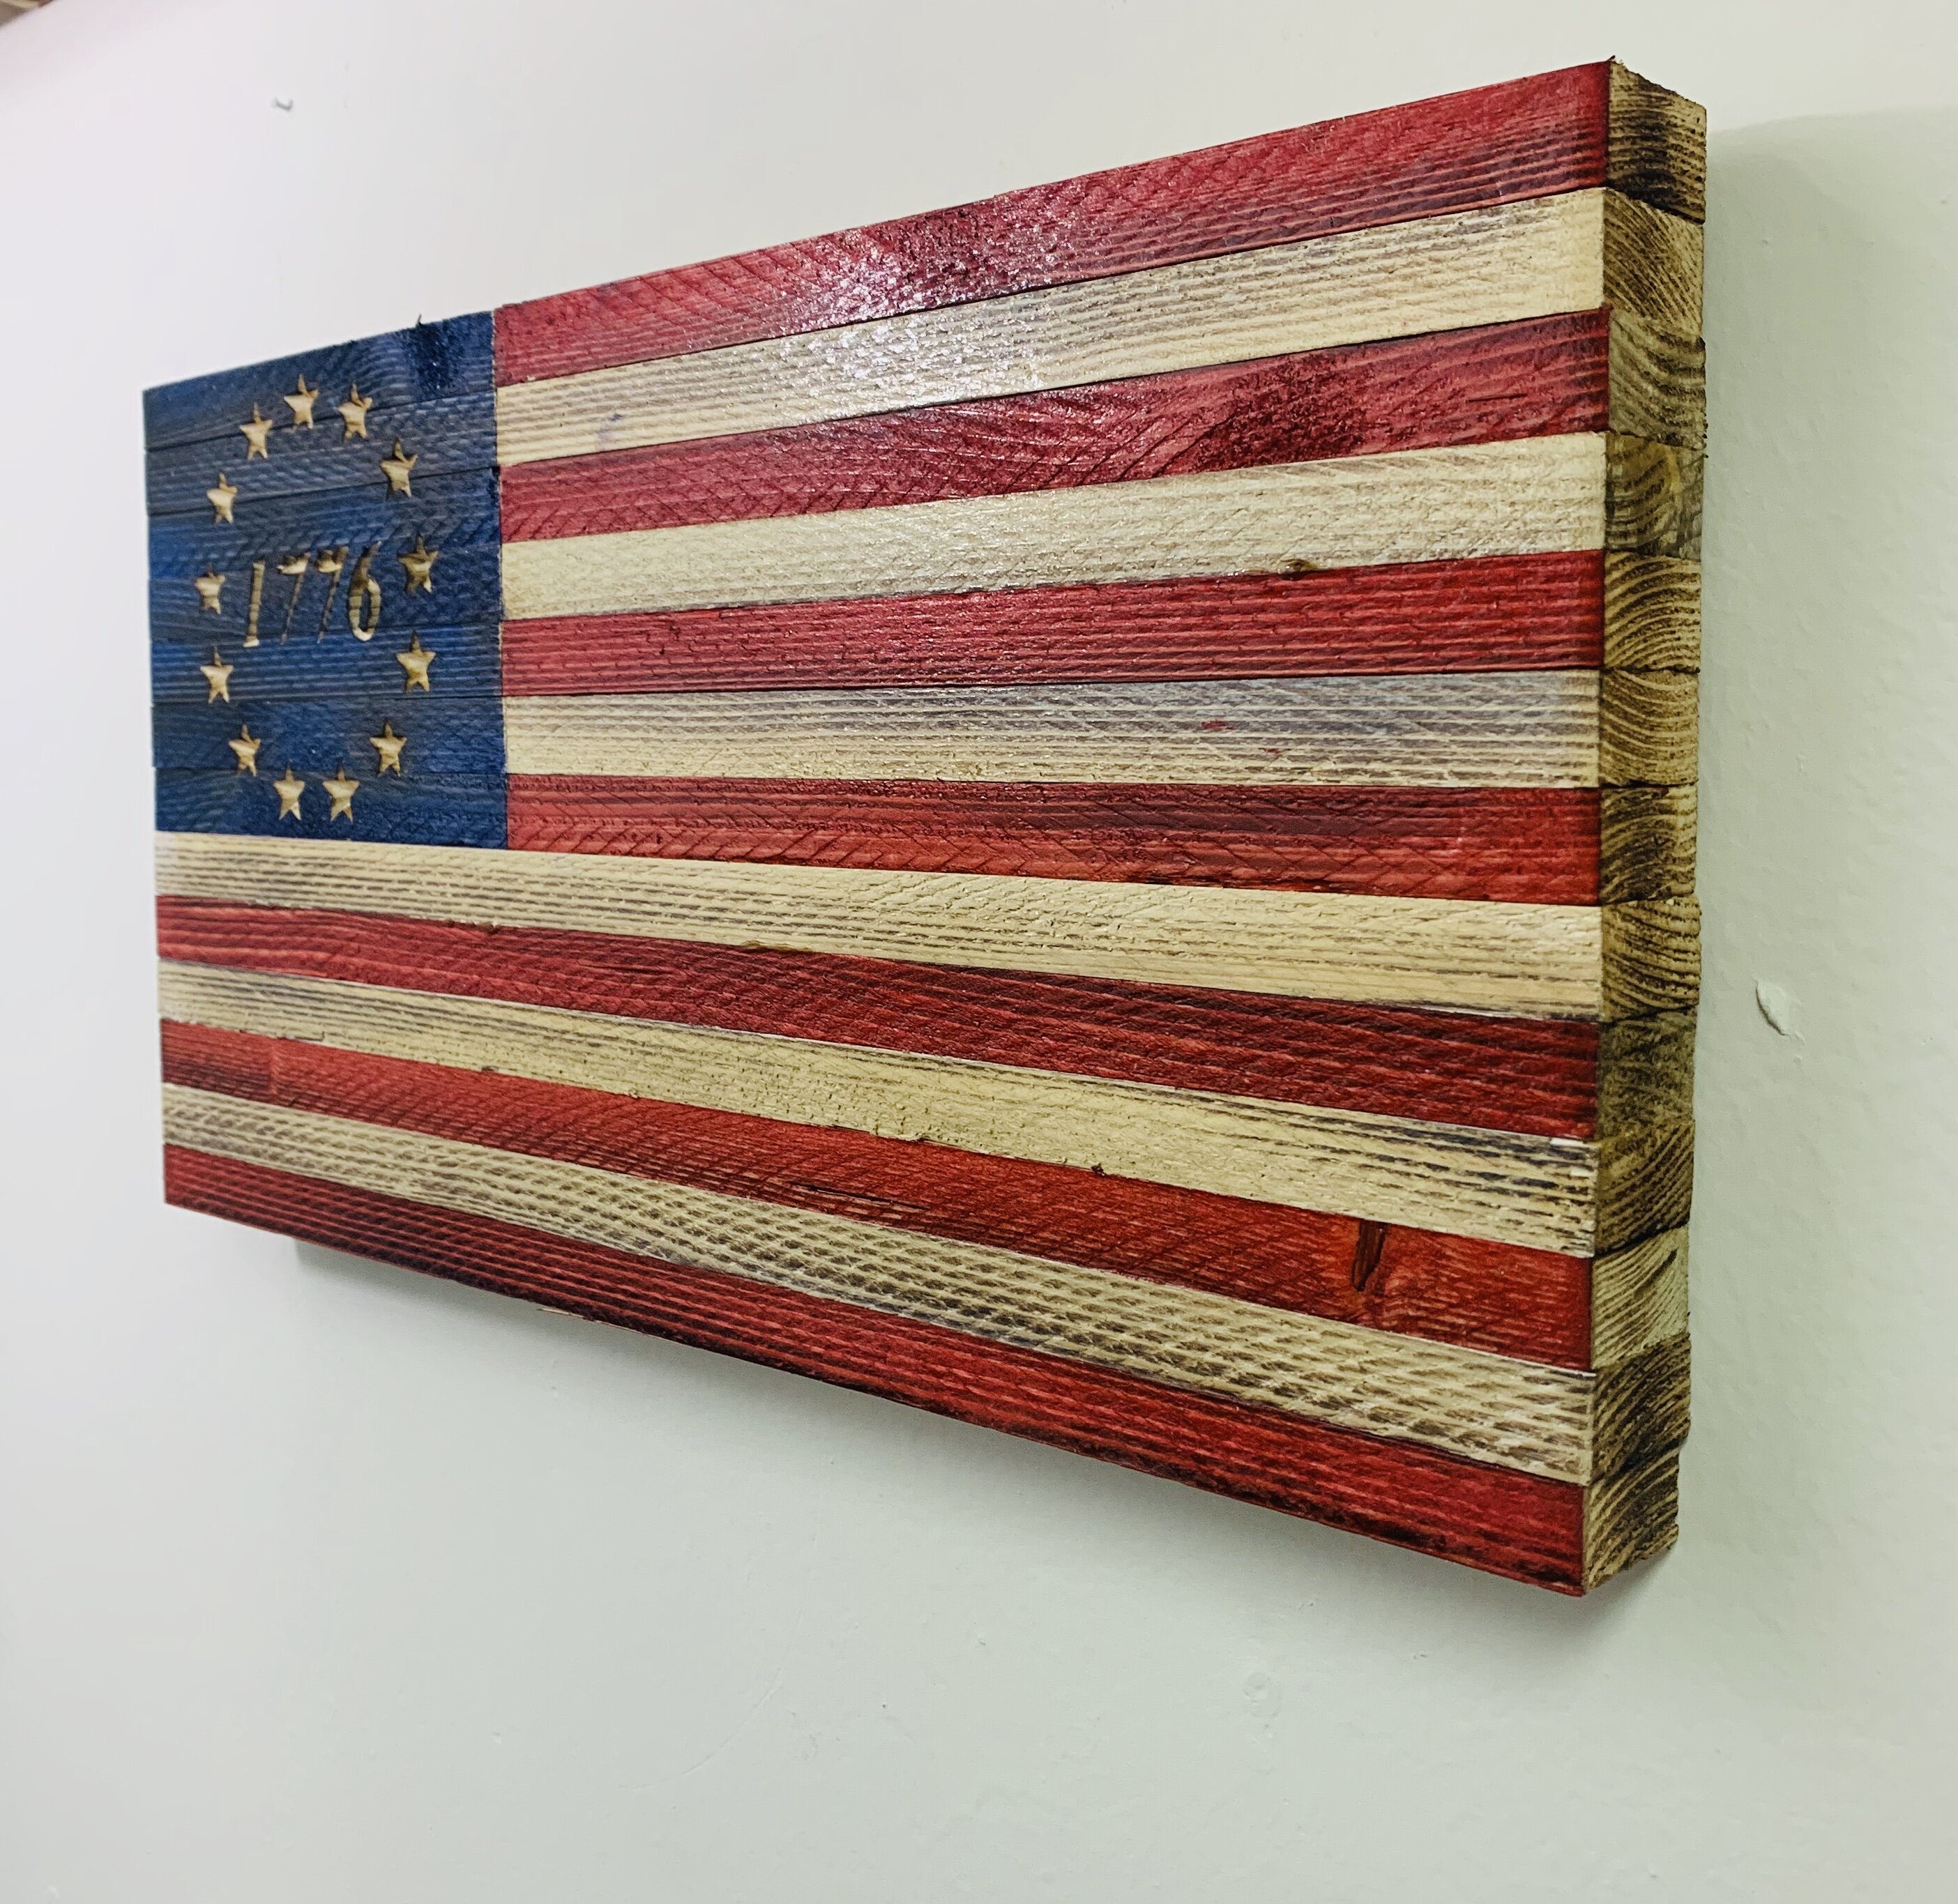 United States Of America Est 1776 Wood Sign